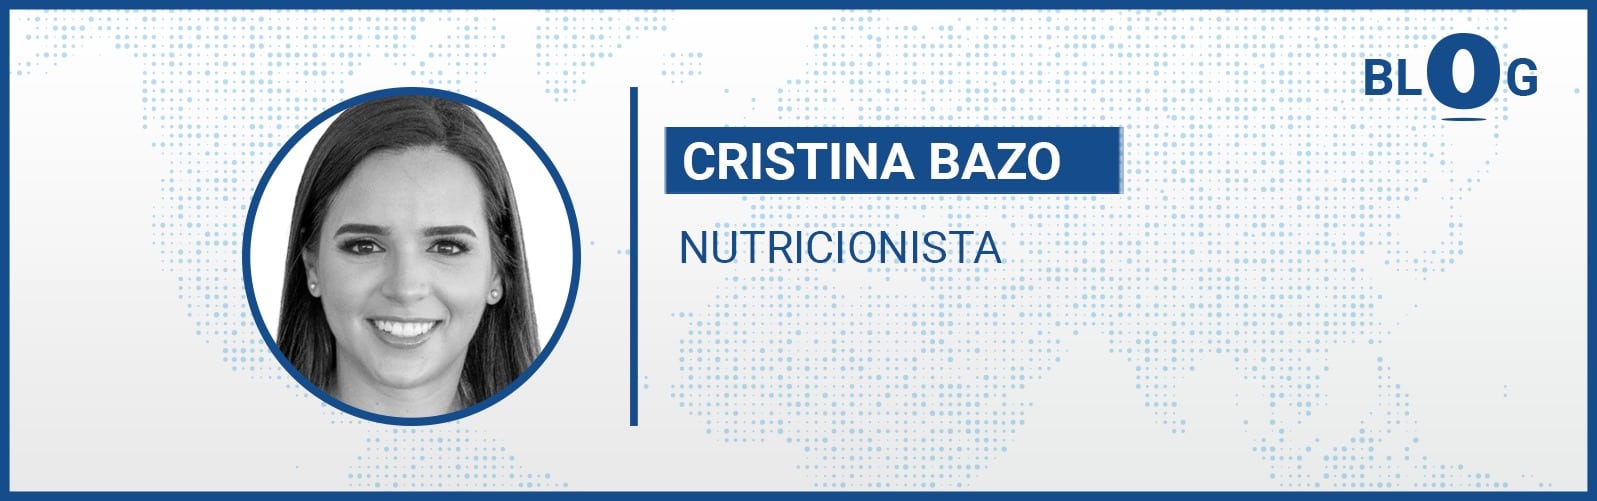 Cristina Bazo nutricionista